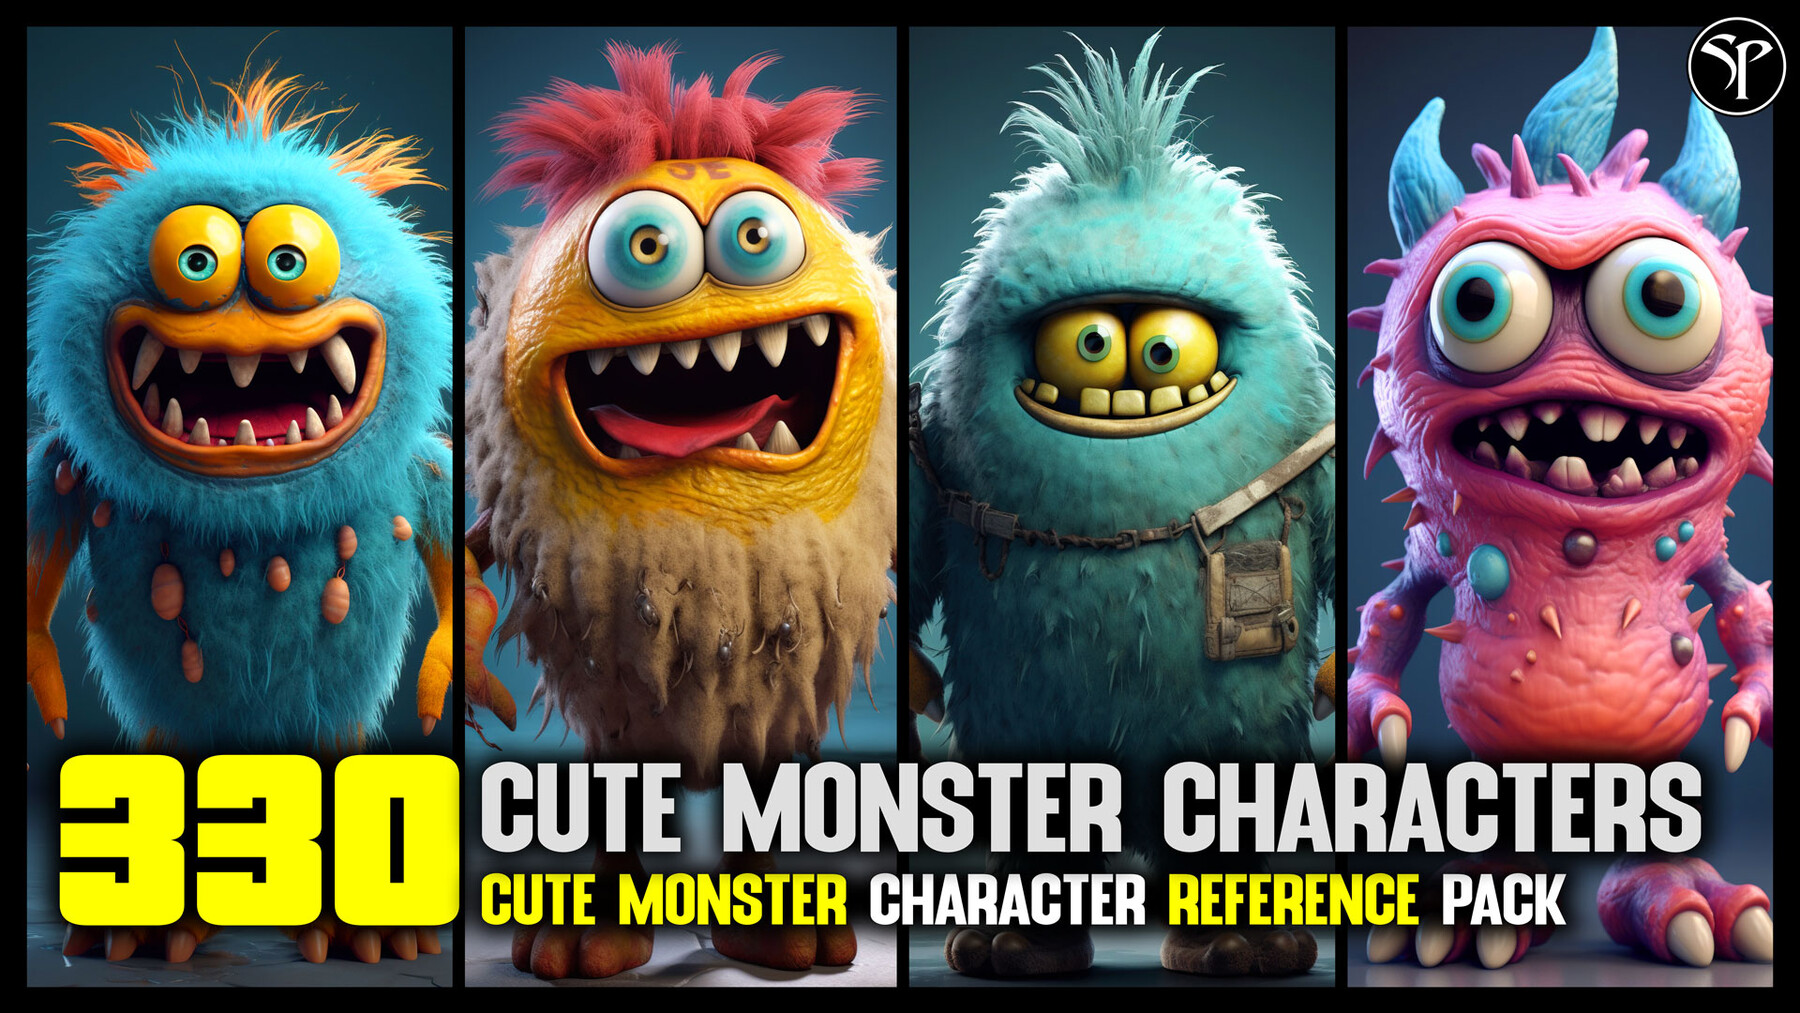 ArtStation - Monsters, Inc. inspired characters